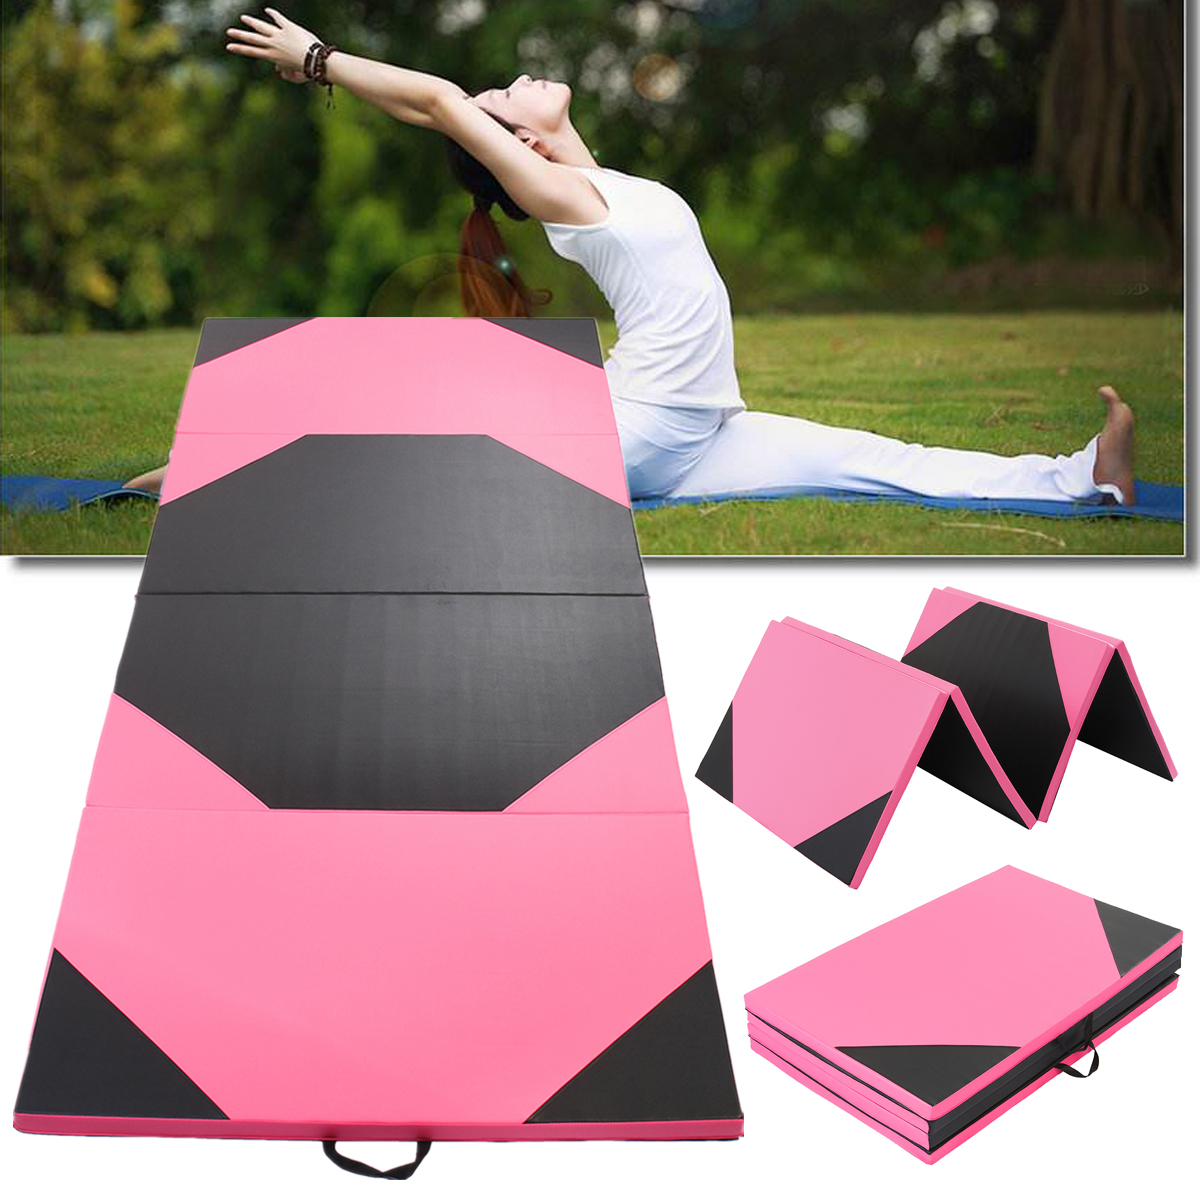 118x47x197inch-4-Fold-Exercise-Yoga-Gymnastics-Mat-Gym-PU-Soft-Tumble-Play-Crash-Safety-Fitness-Pad-1245341-1